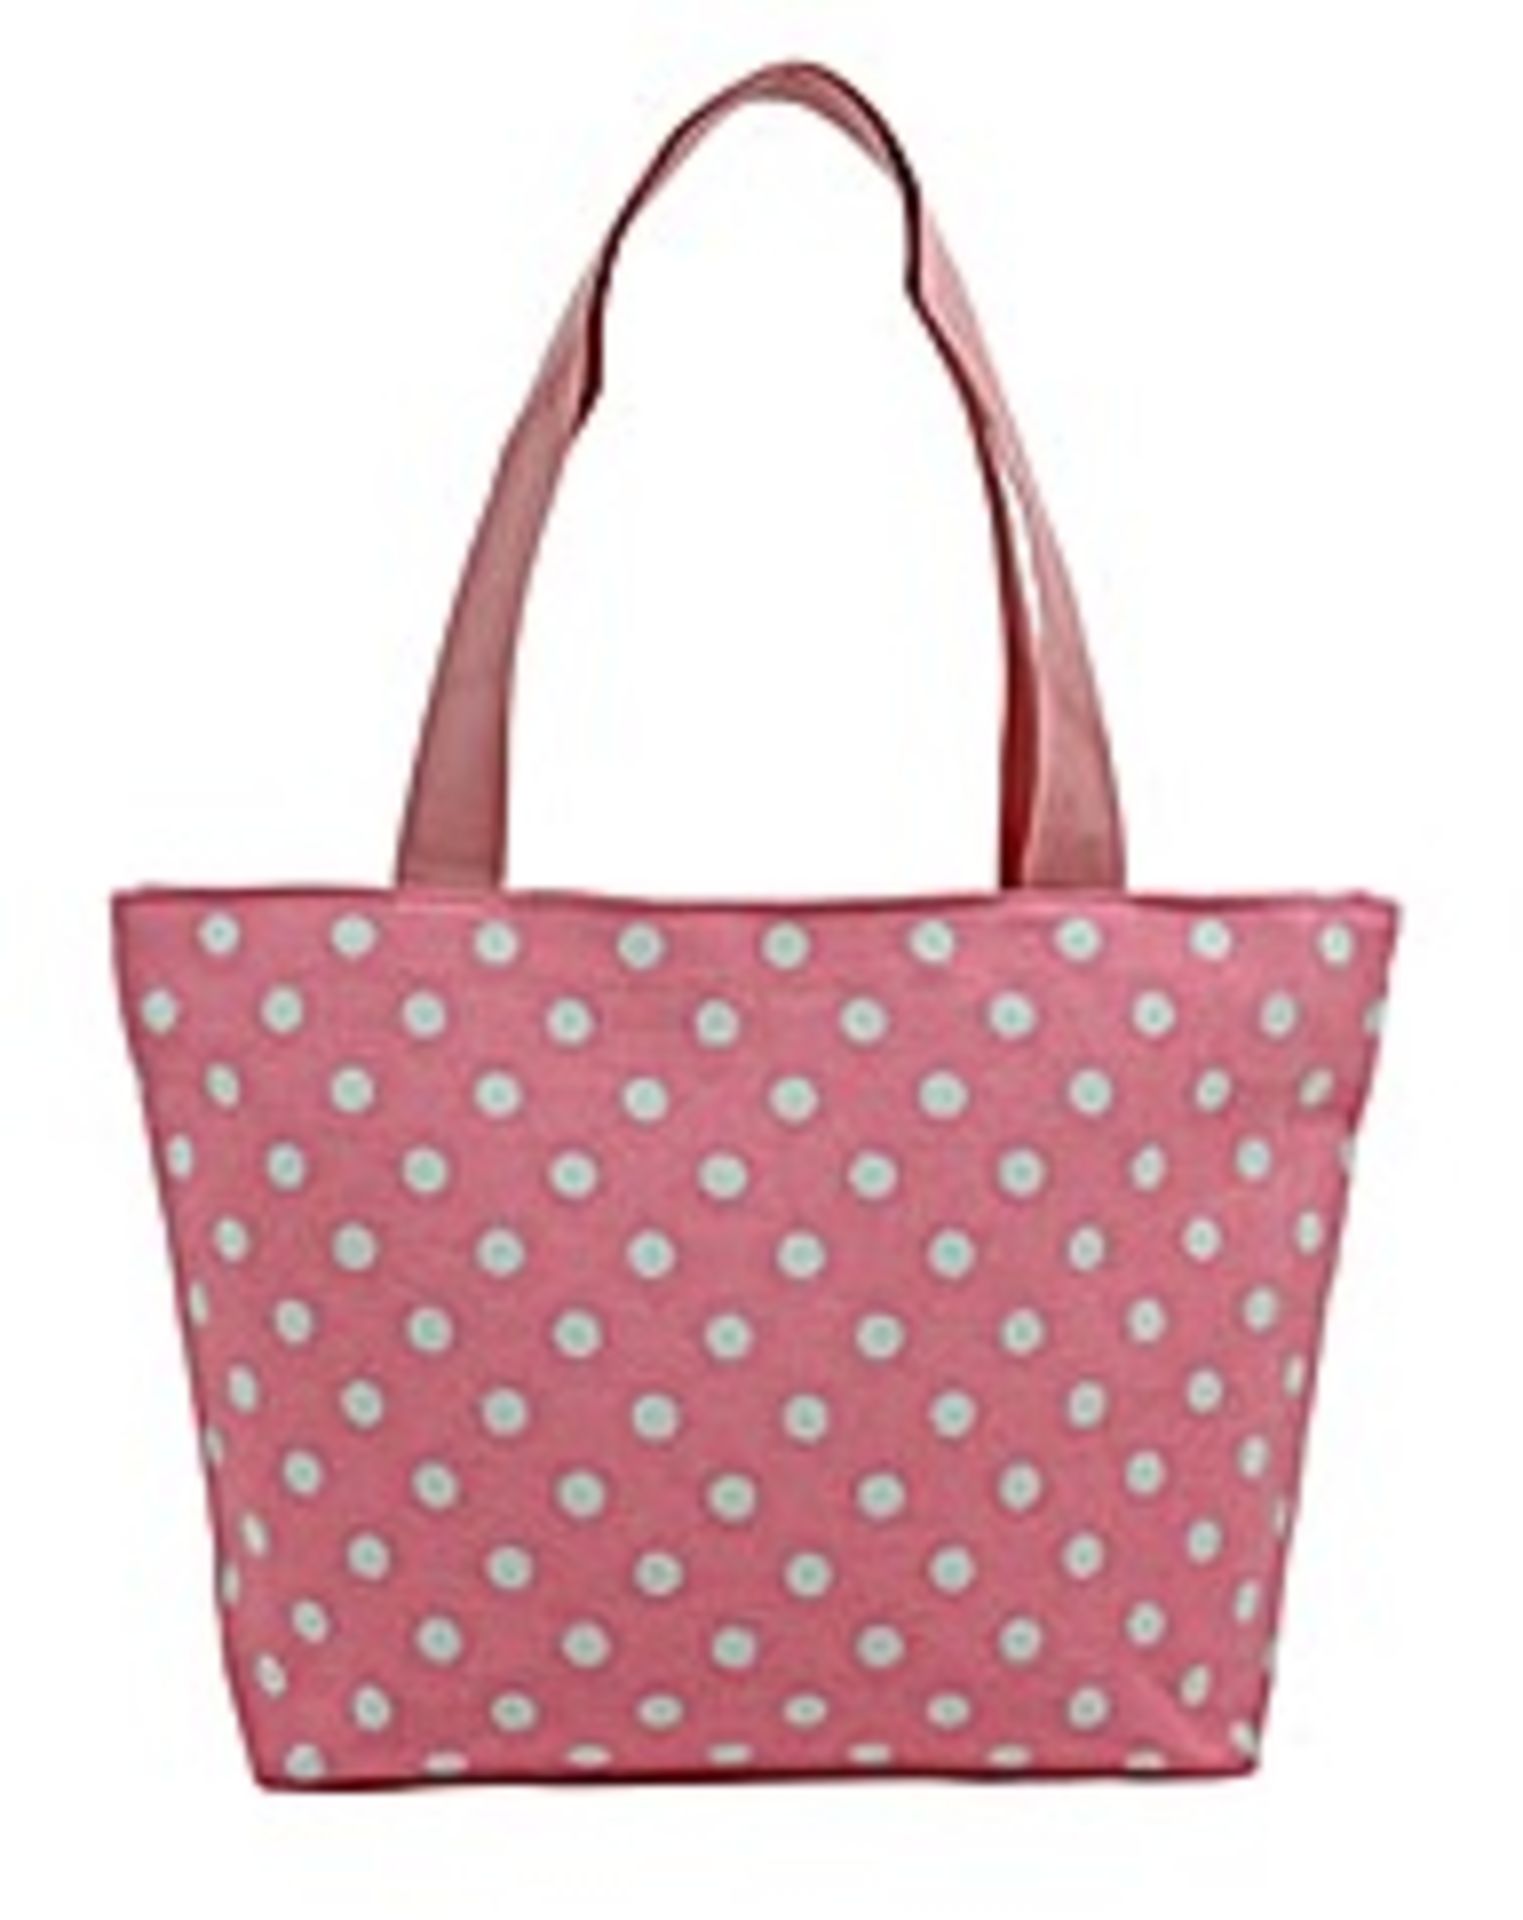 V Brand New Elizabeth Rose Fleur Pink With White Spots Shopping Bag